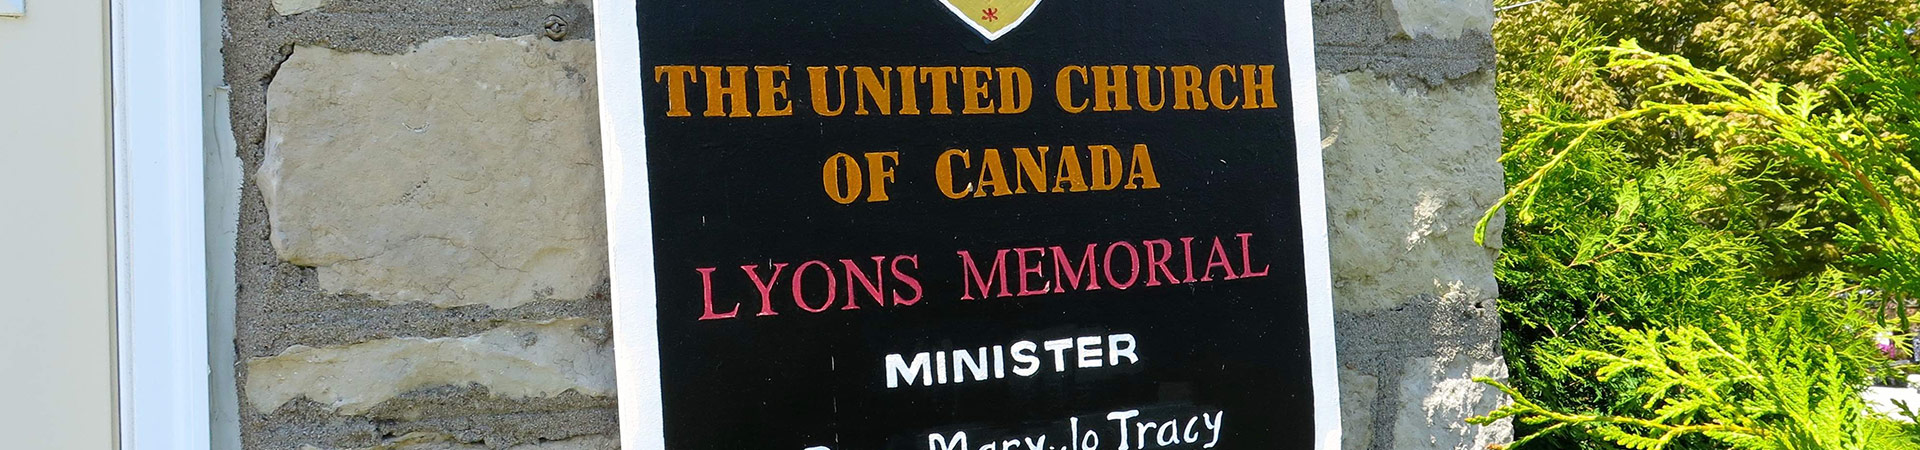 united church of canada sign